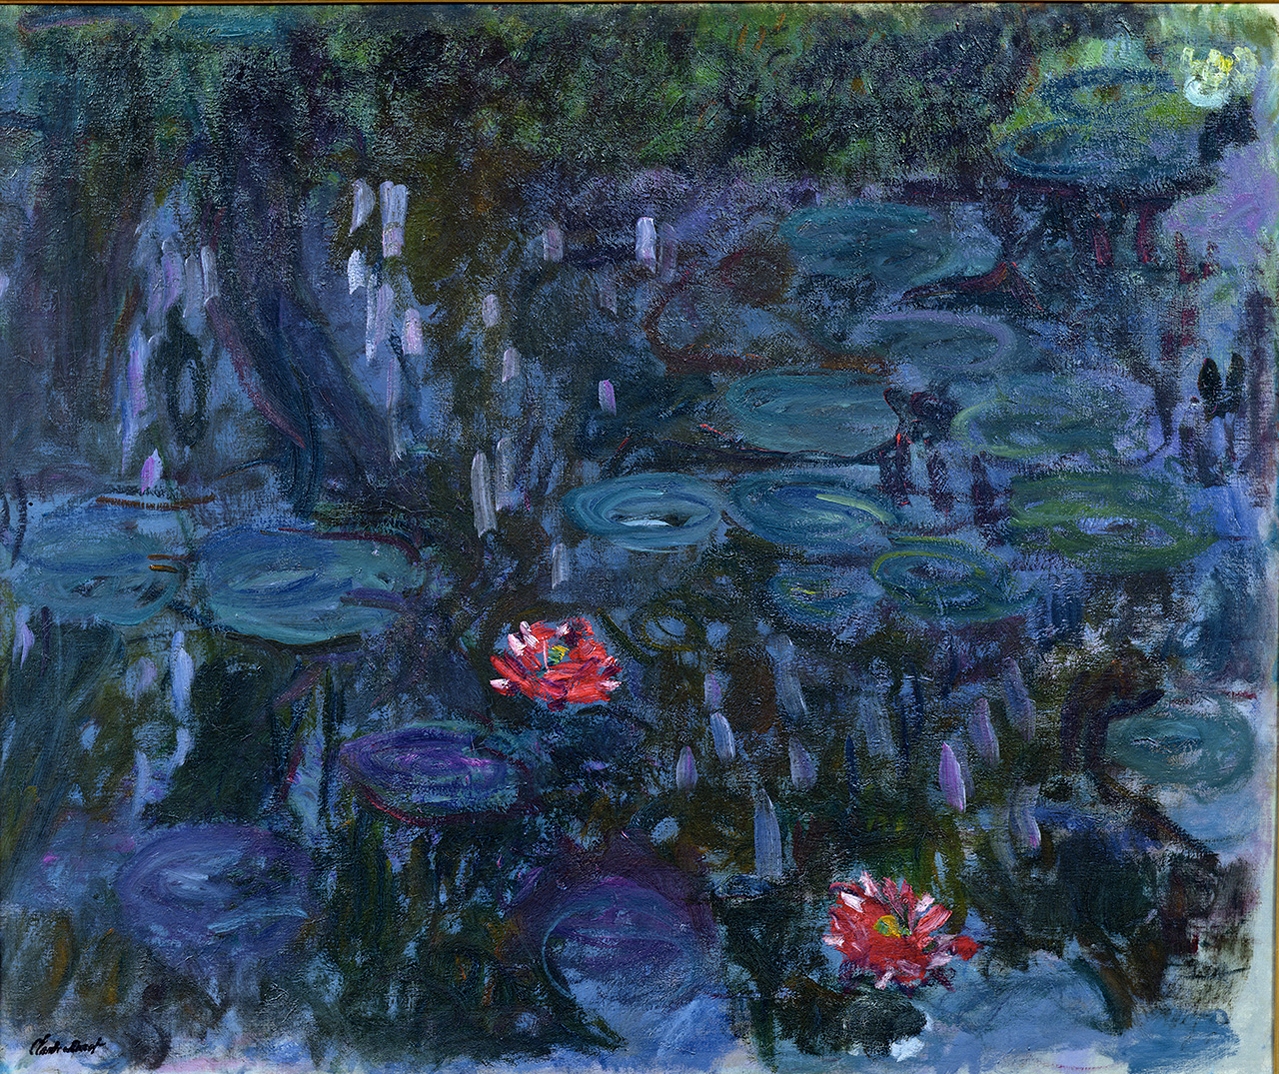 Claude+Monet-1840-1926 (541).jpg